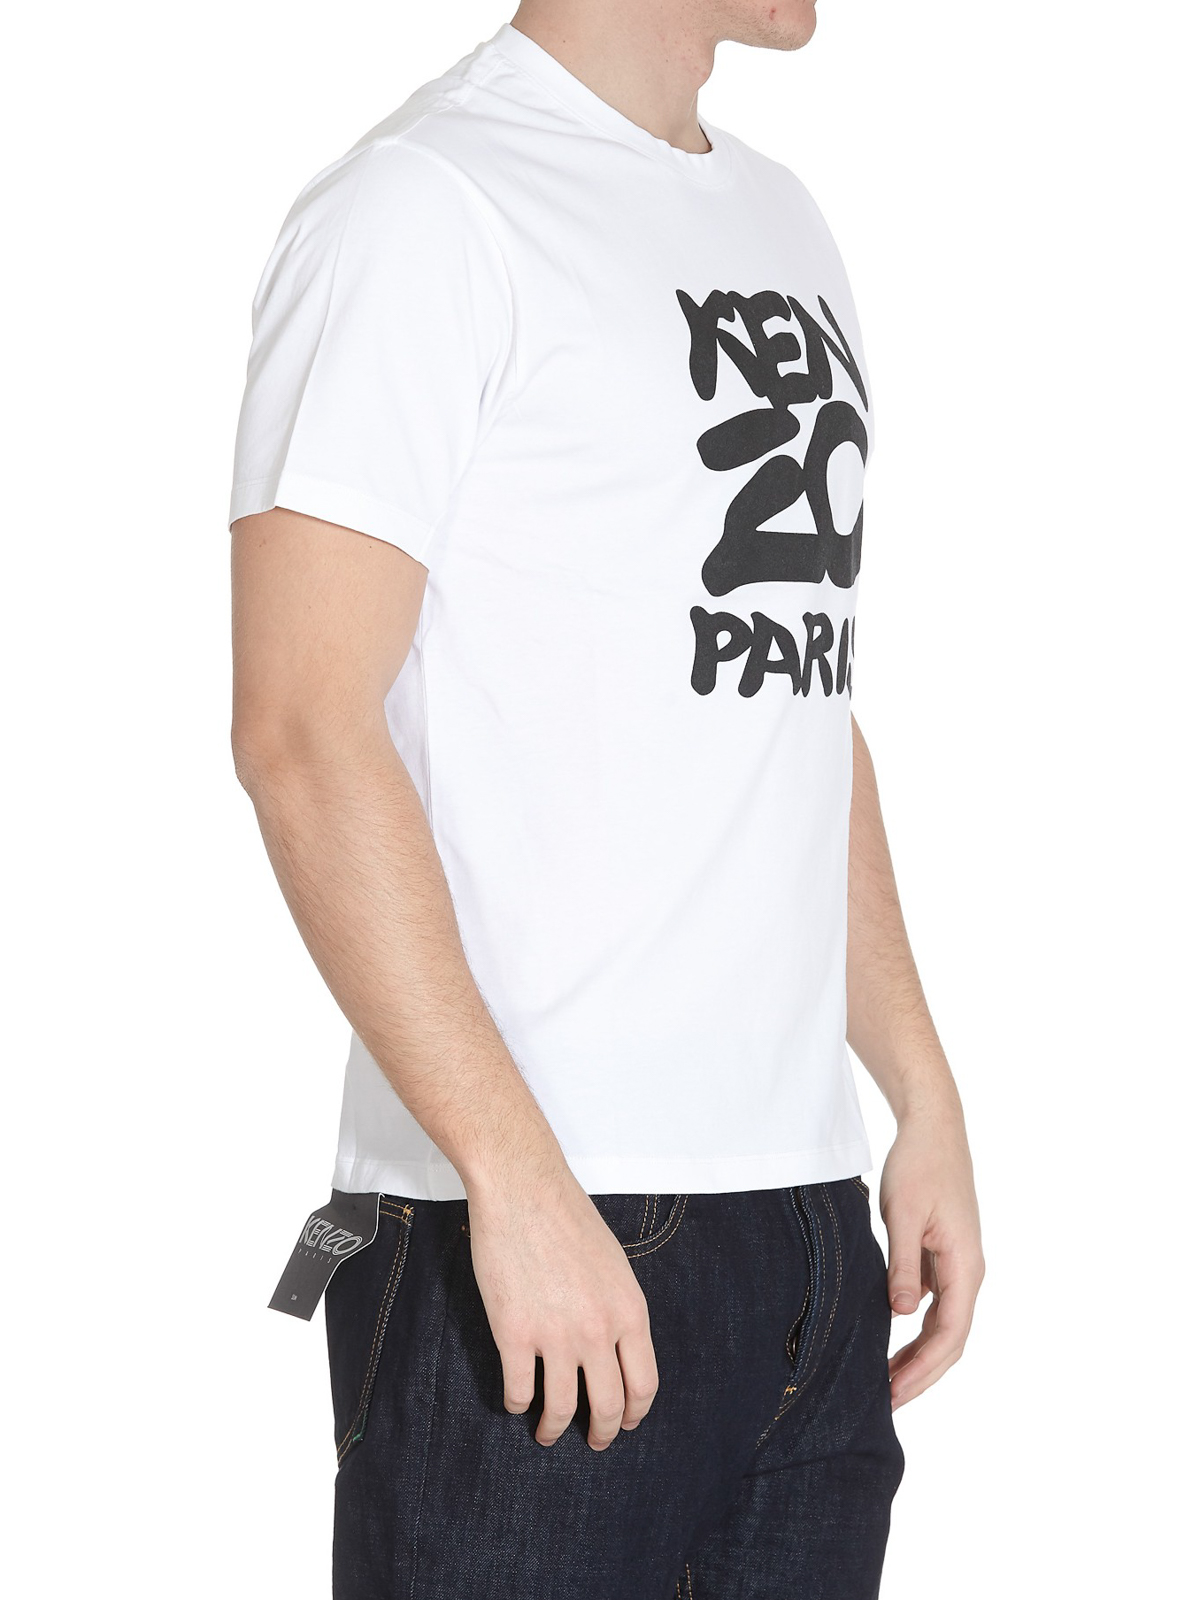 Regulatie deuropening vorm T-shirts Kenzo - Kenzo Paris T-shirt - FA55TS0184SA01 | iKRIX.com